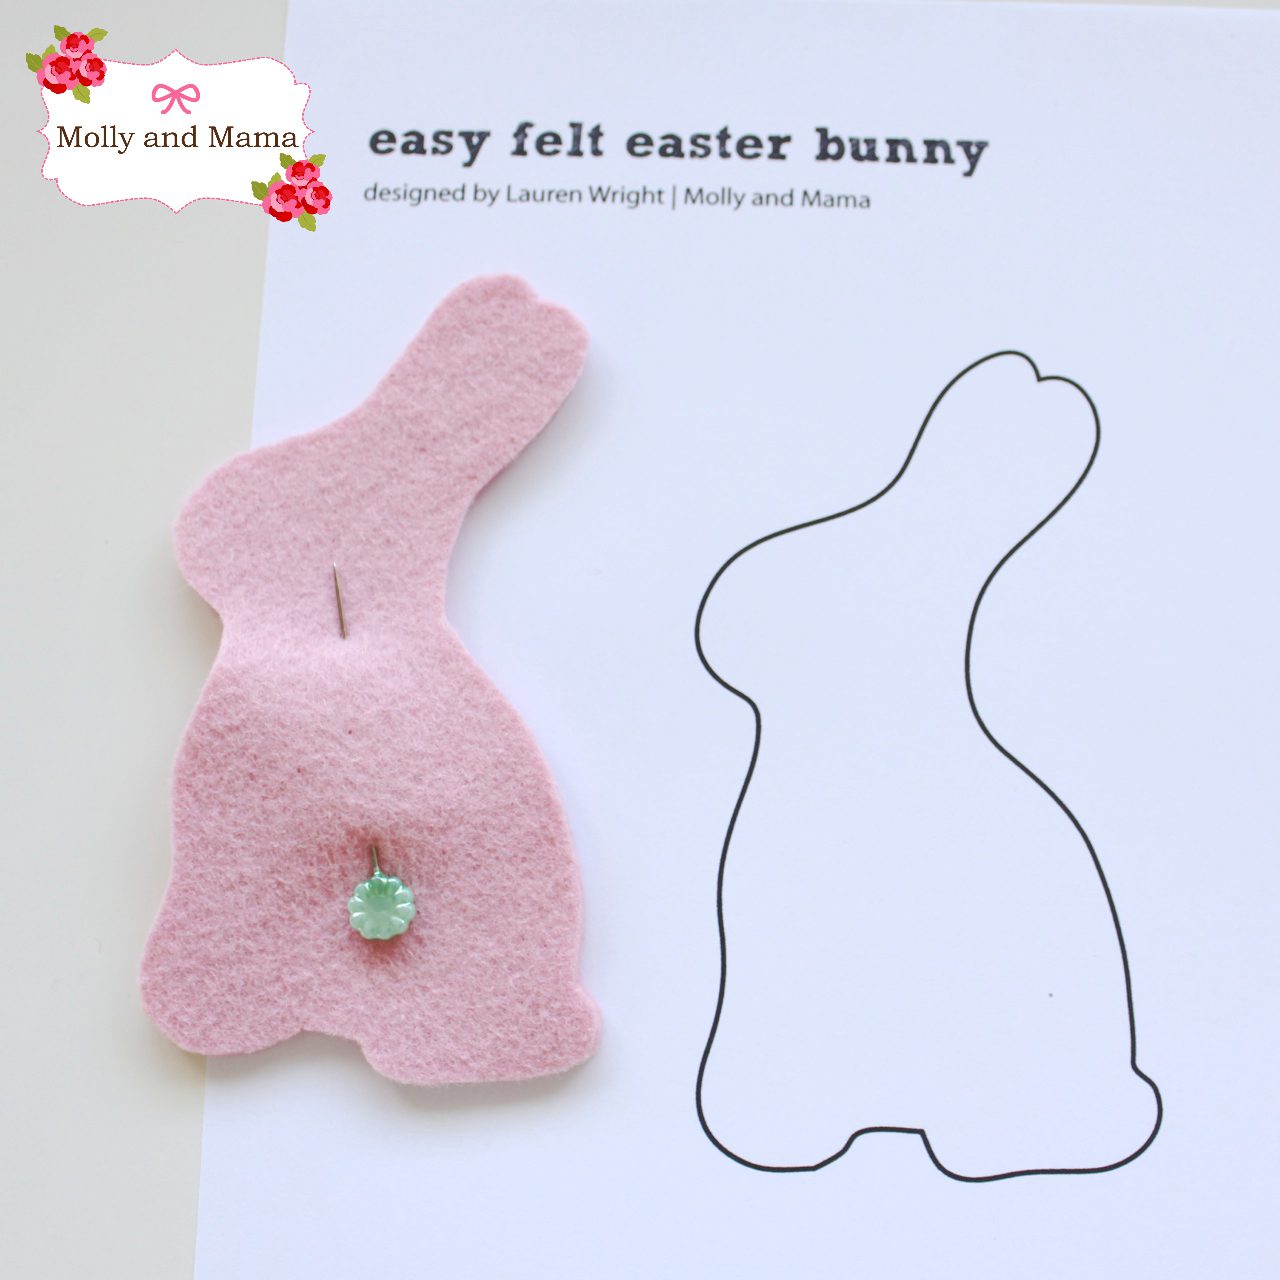 Easy Felt Bunny Tutorial by Molly and Mama 3